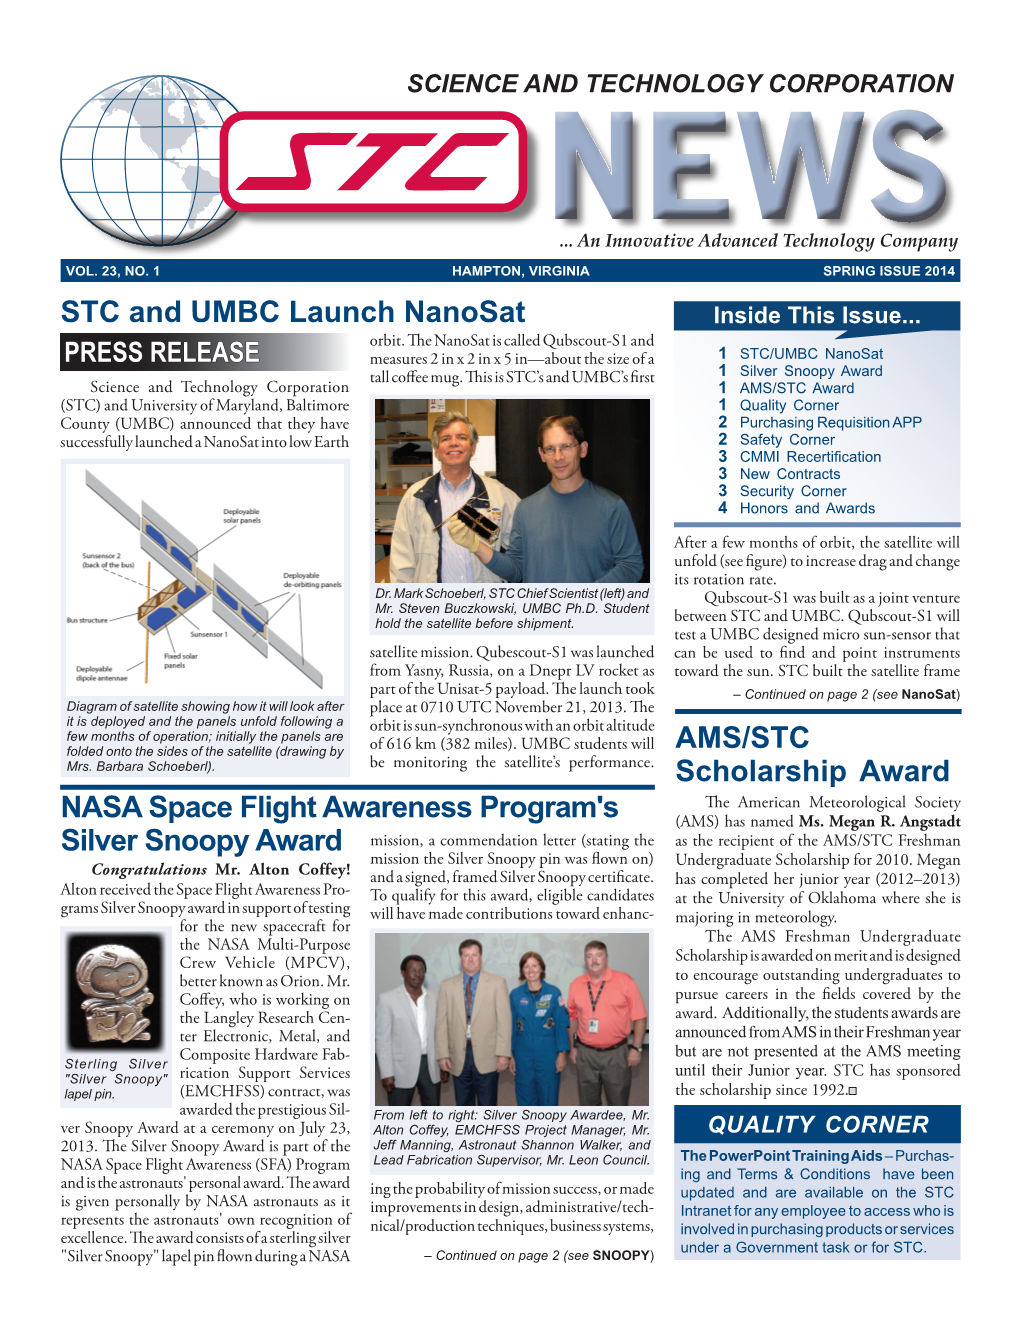 NASA Space Flight Awareness Program's Silver Snoopy Award STC and UMBC Launch Nanosat AMS/STC Scholarship Award